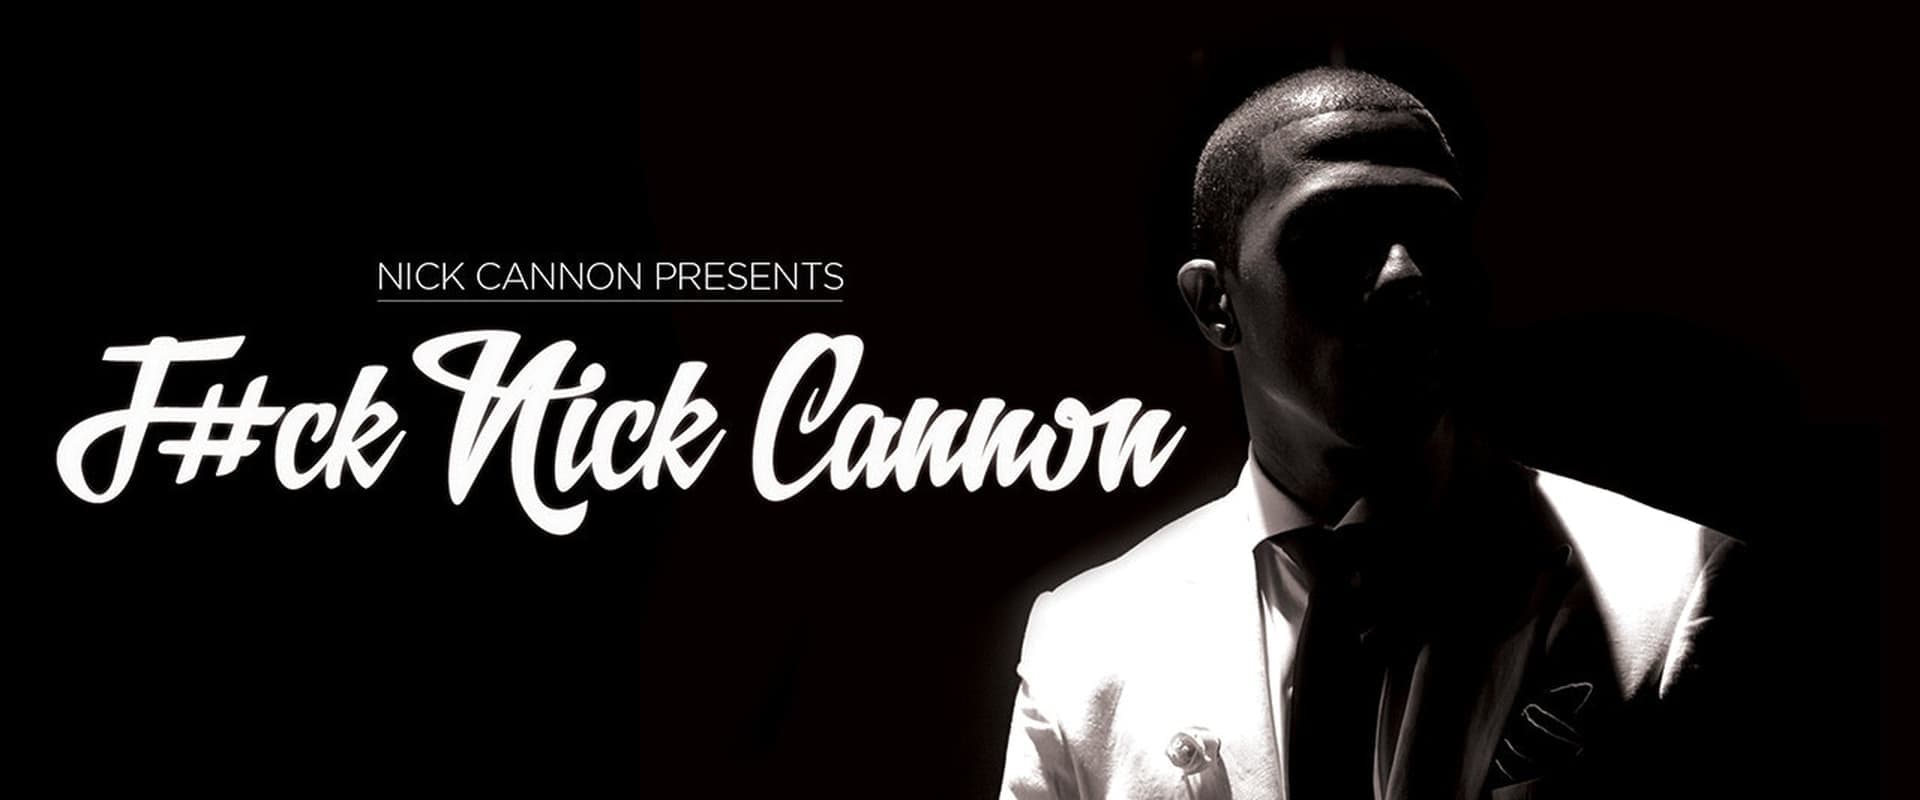 F#Ck Nick Cannon